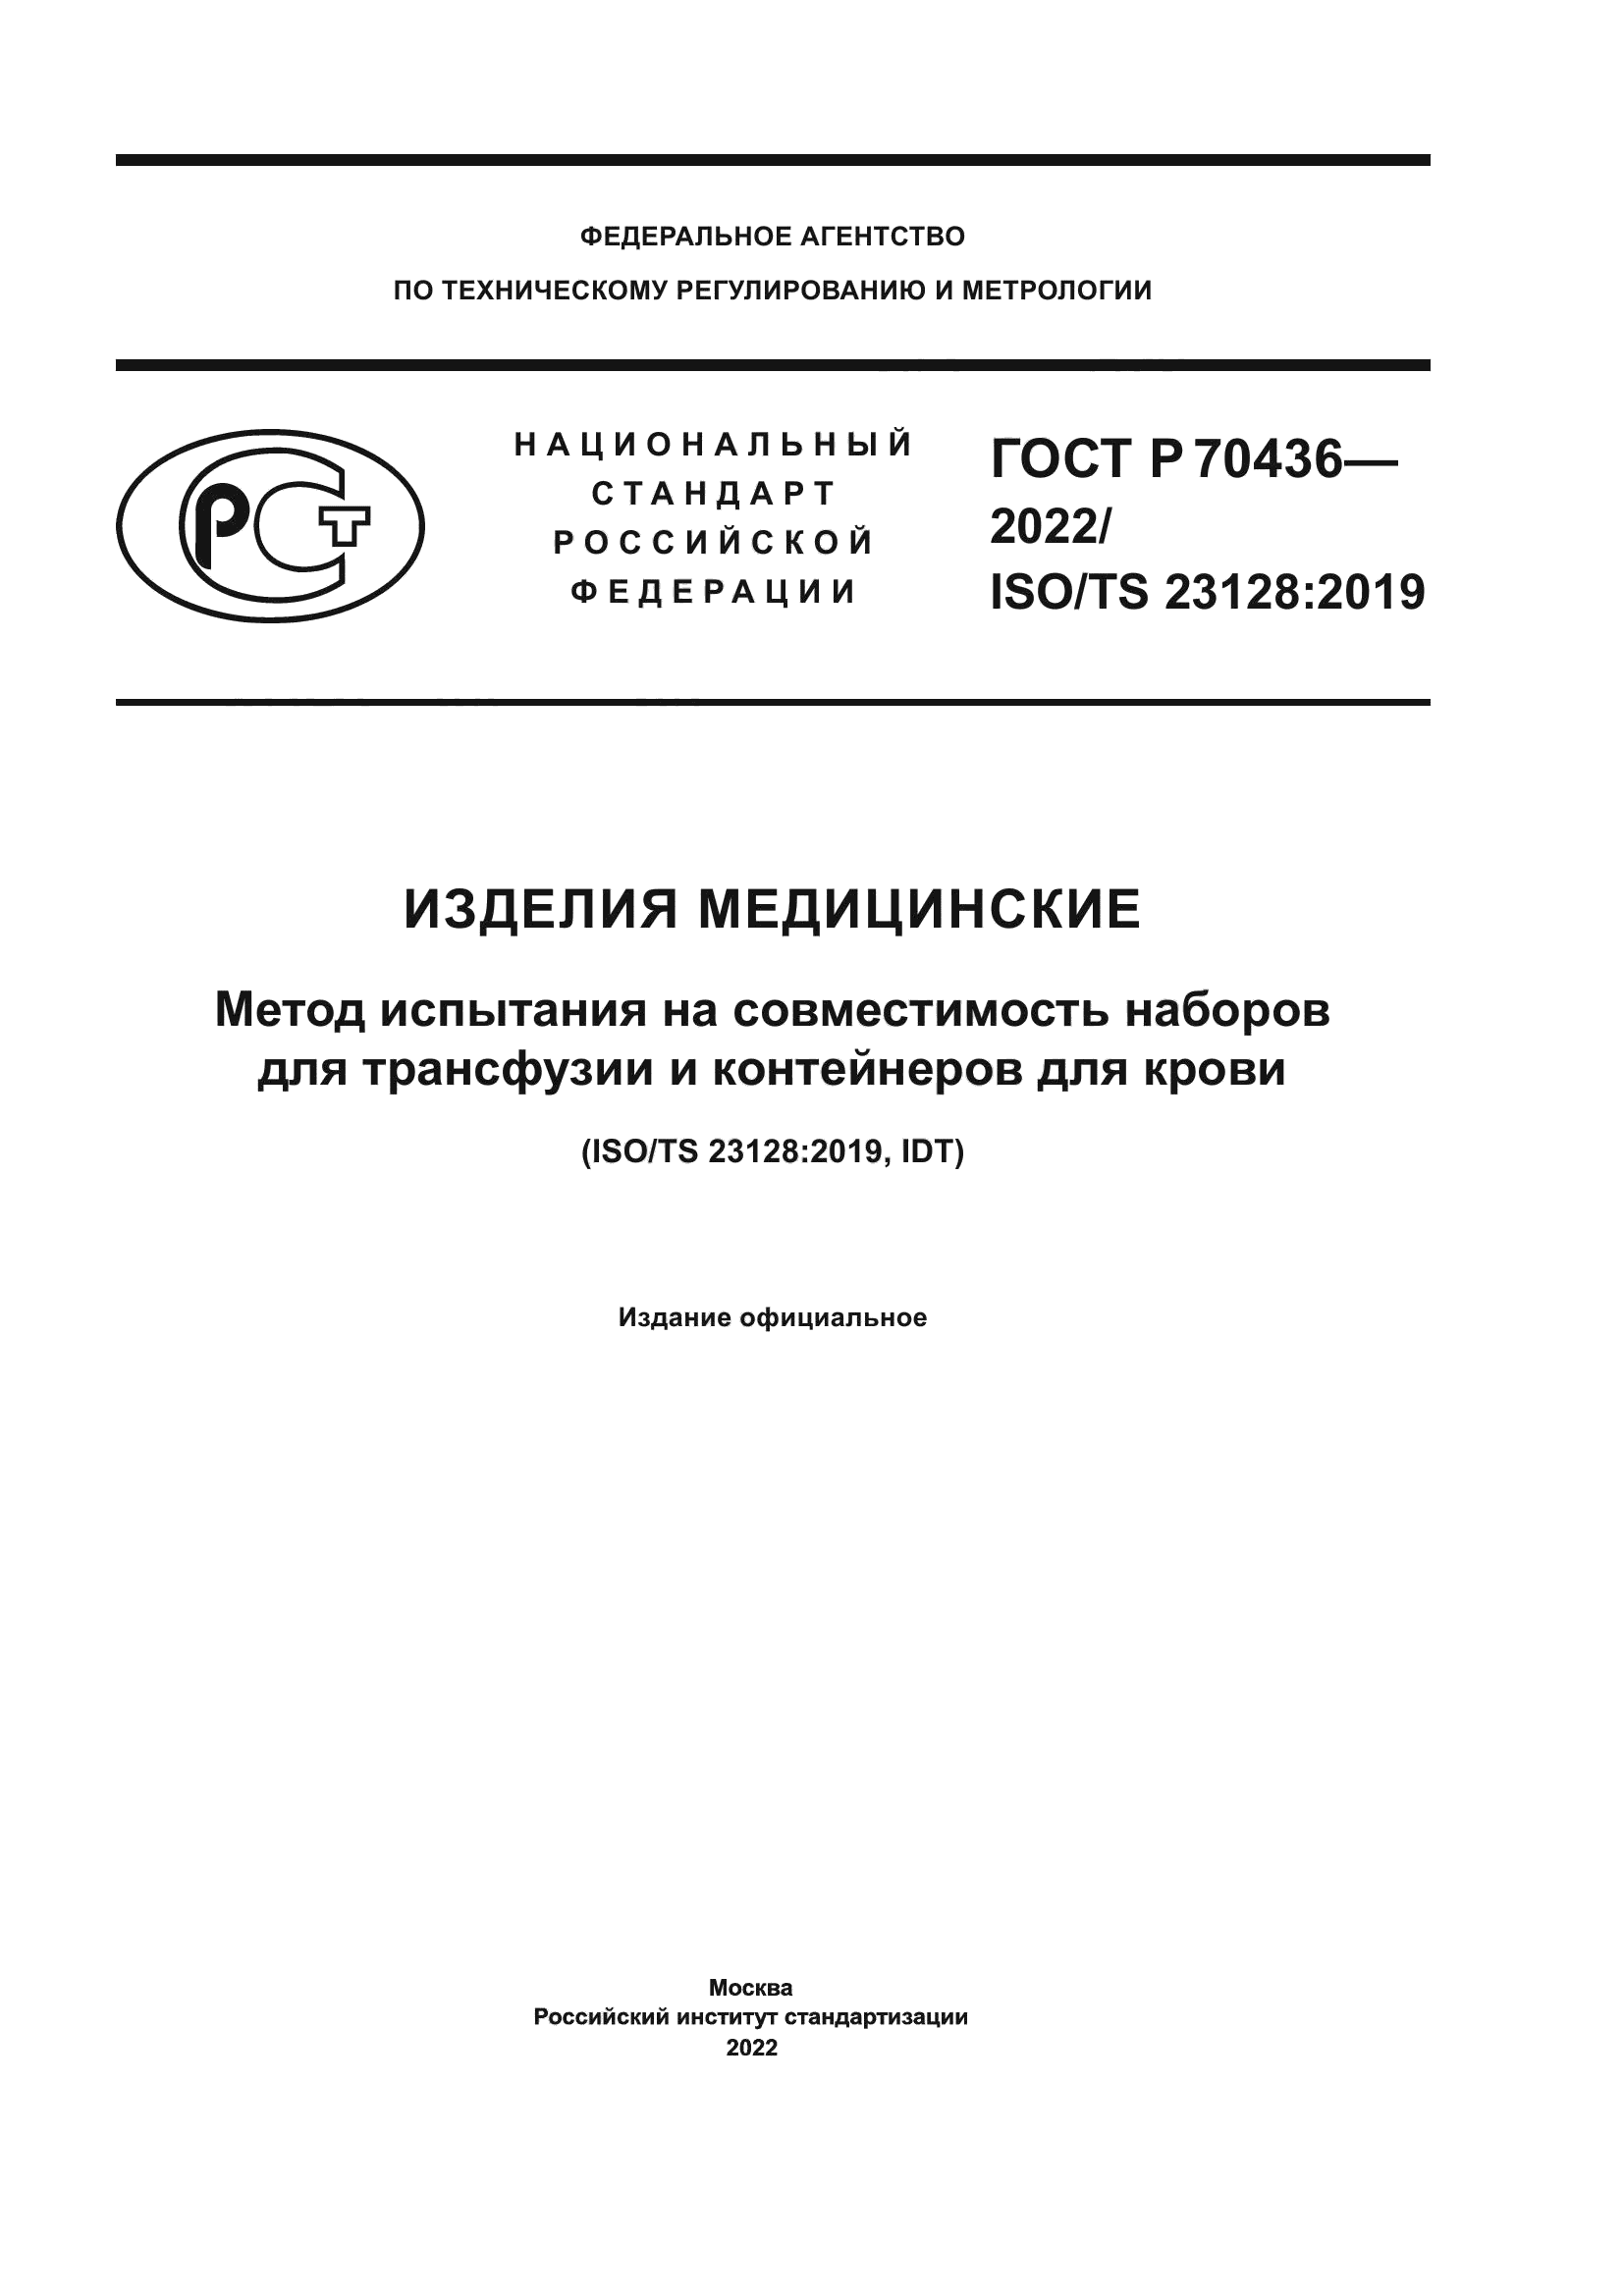 ГОСТ Р 70436-2022